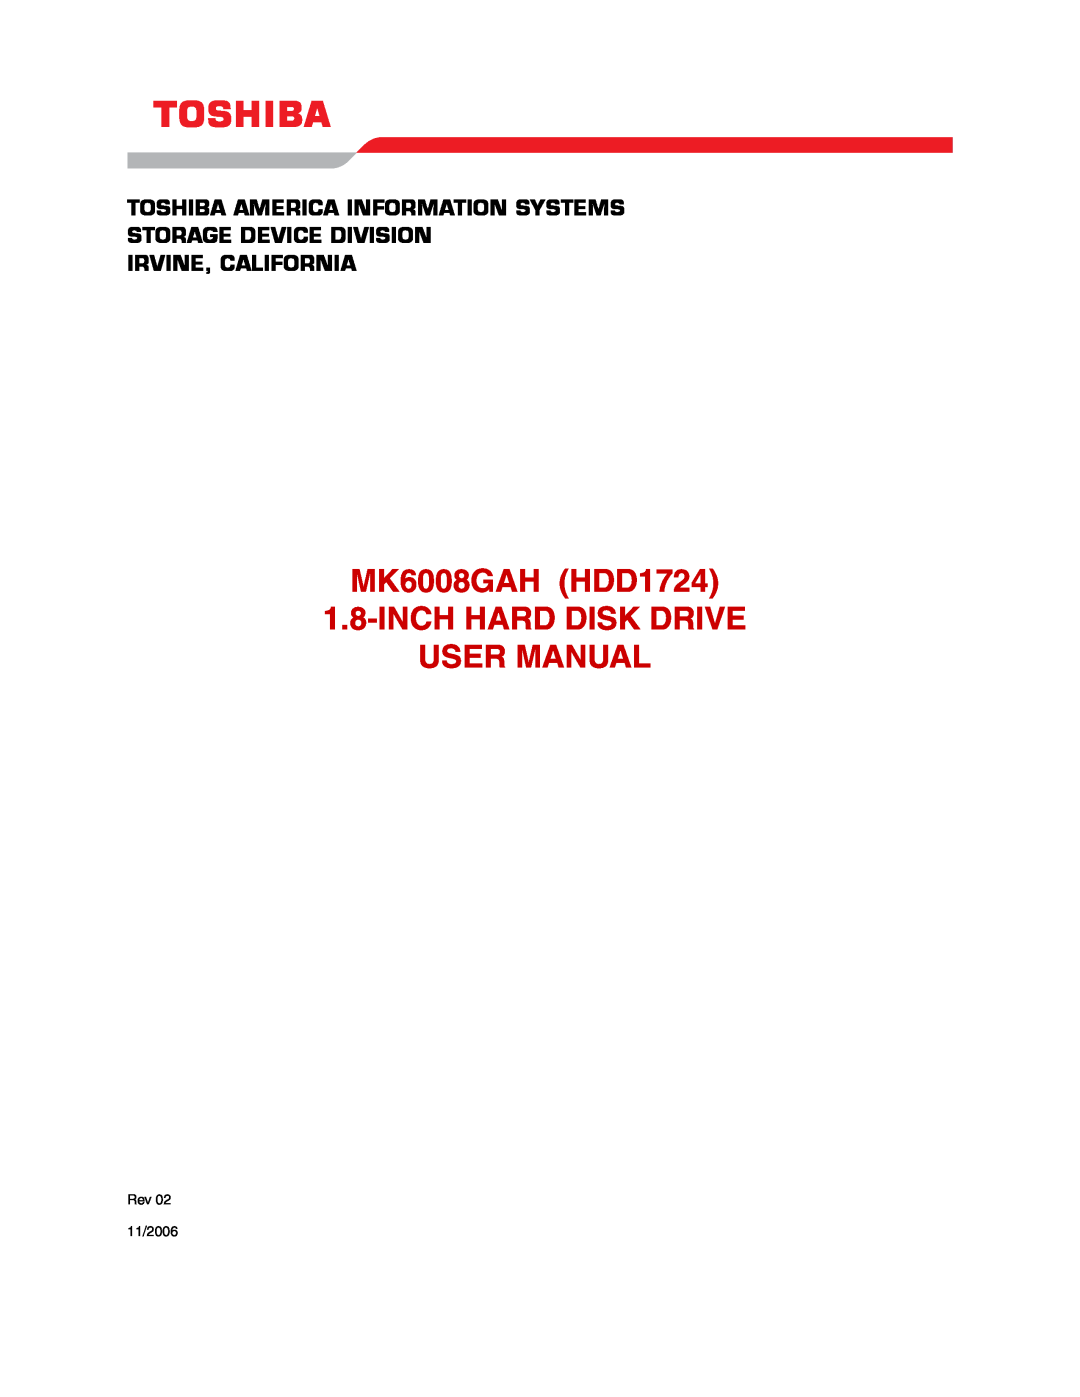 Toshiba MK6008GAH user manual Toshiba America Information Systems Storage Device Division, Irvine, California, Rev 11/2006 